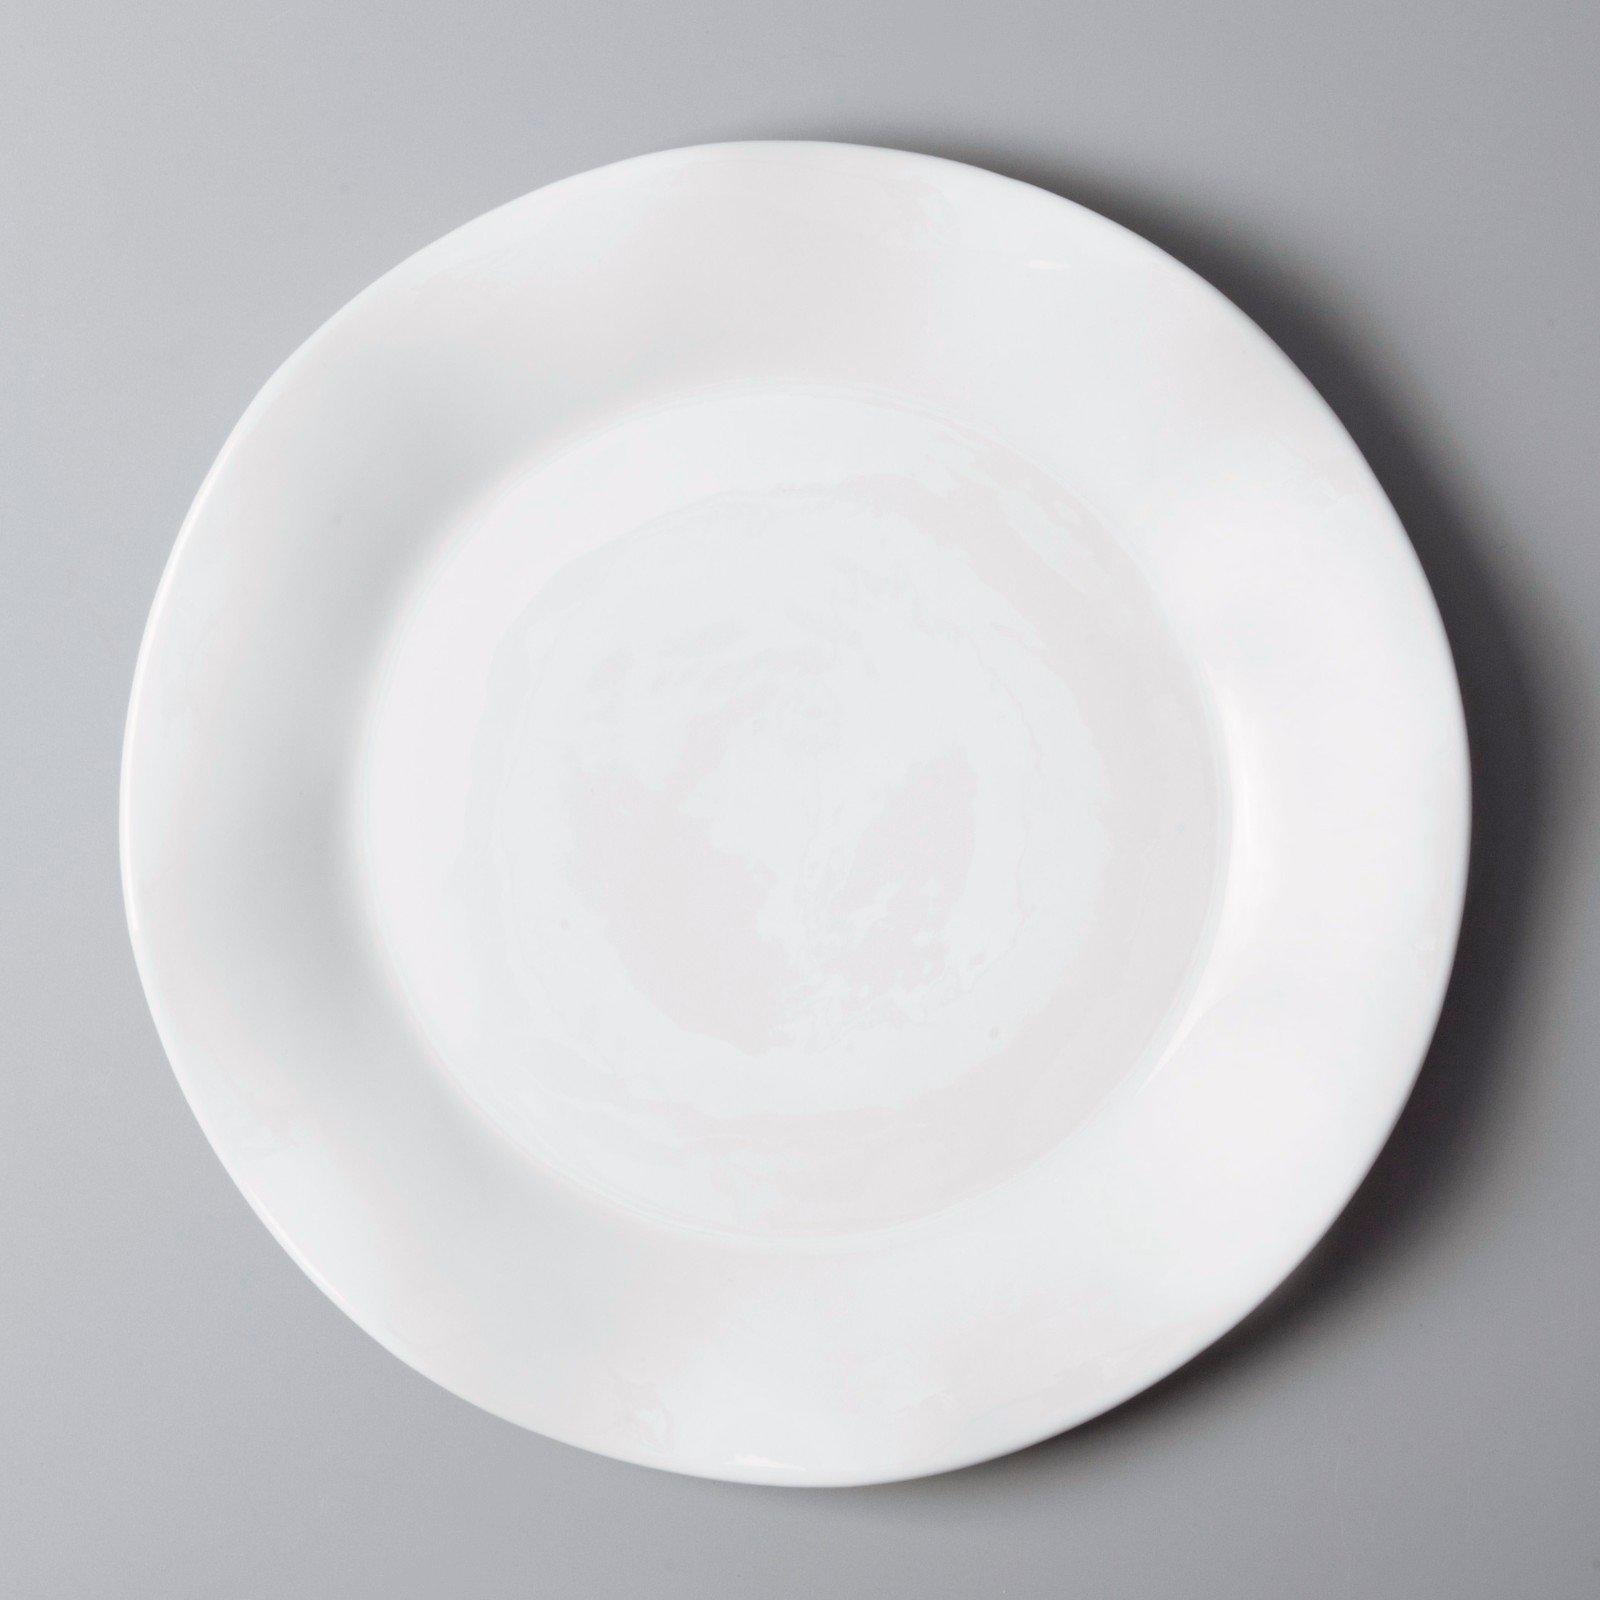 square restaurant dinner plates cheap series for home-2